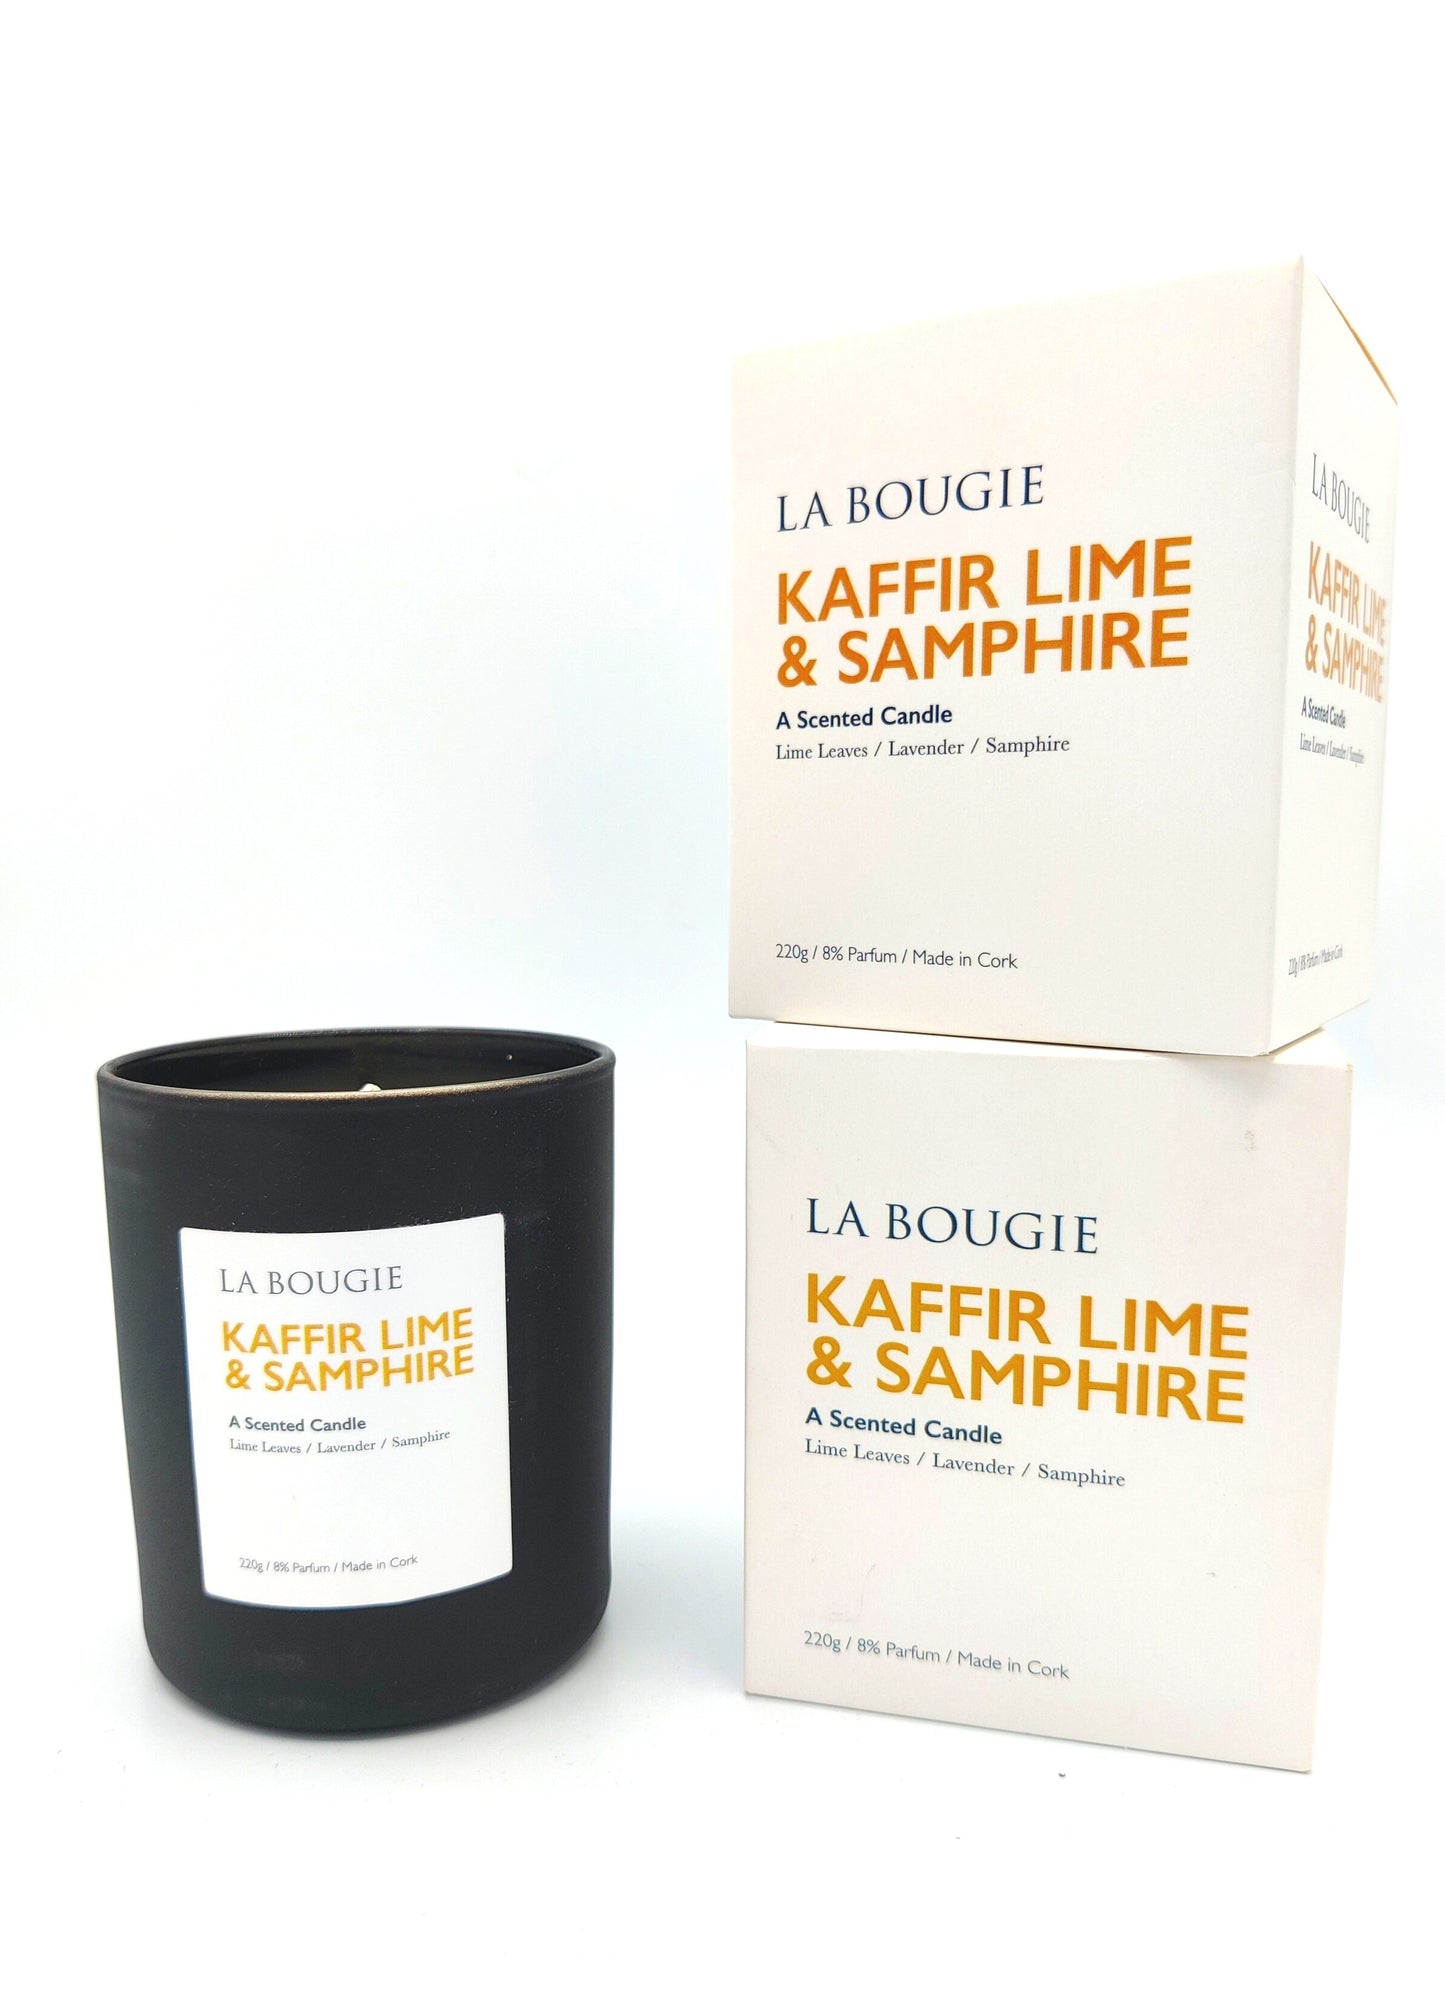 La Bougie Kaffir Lime & Samphire 220g Candle